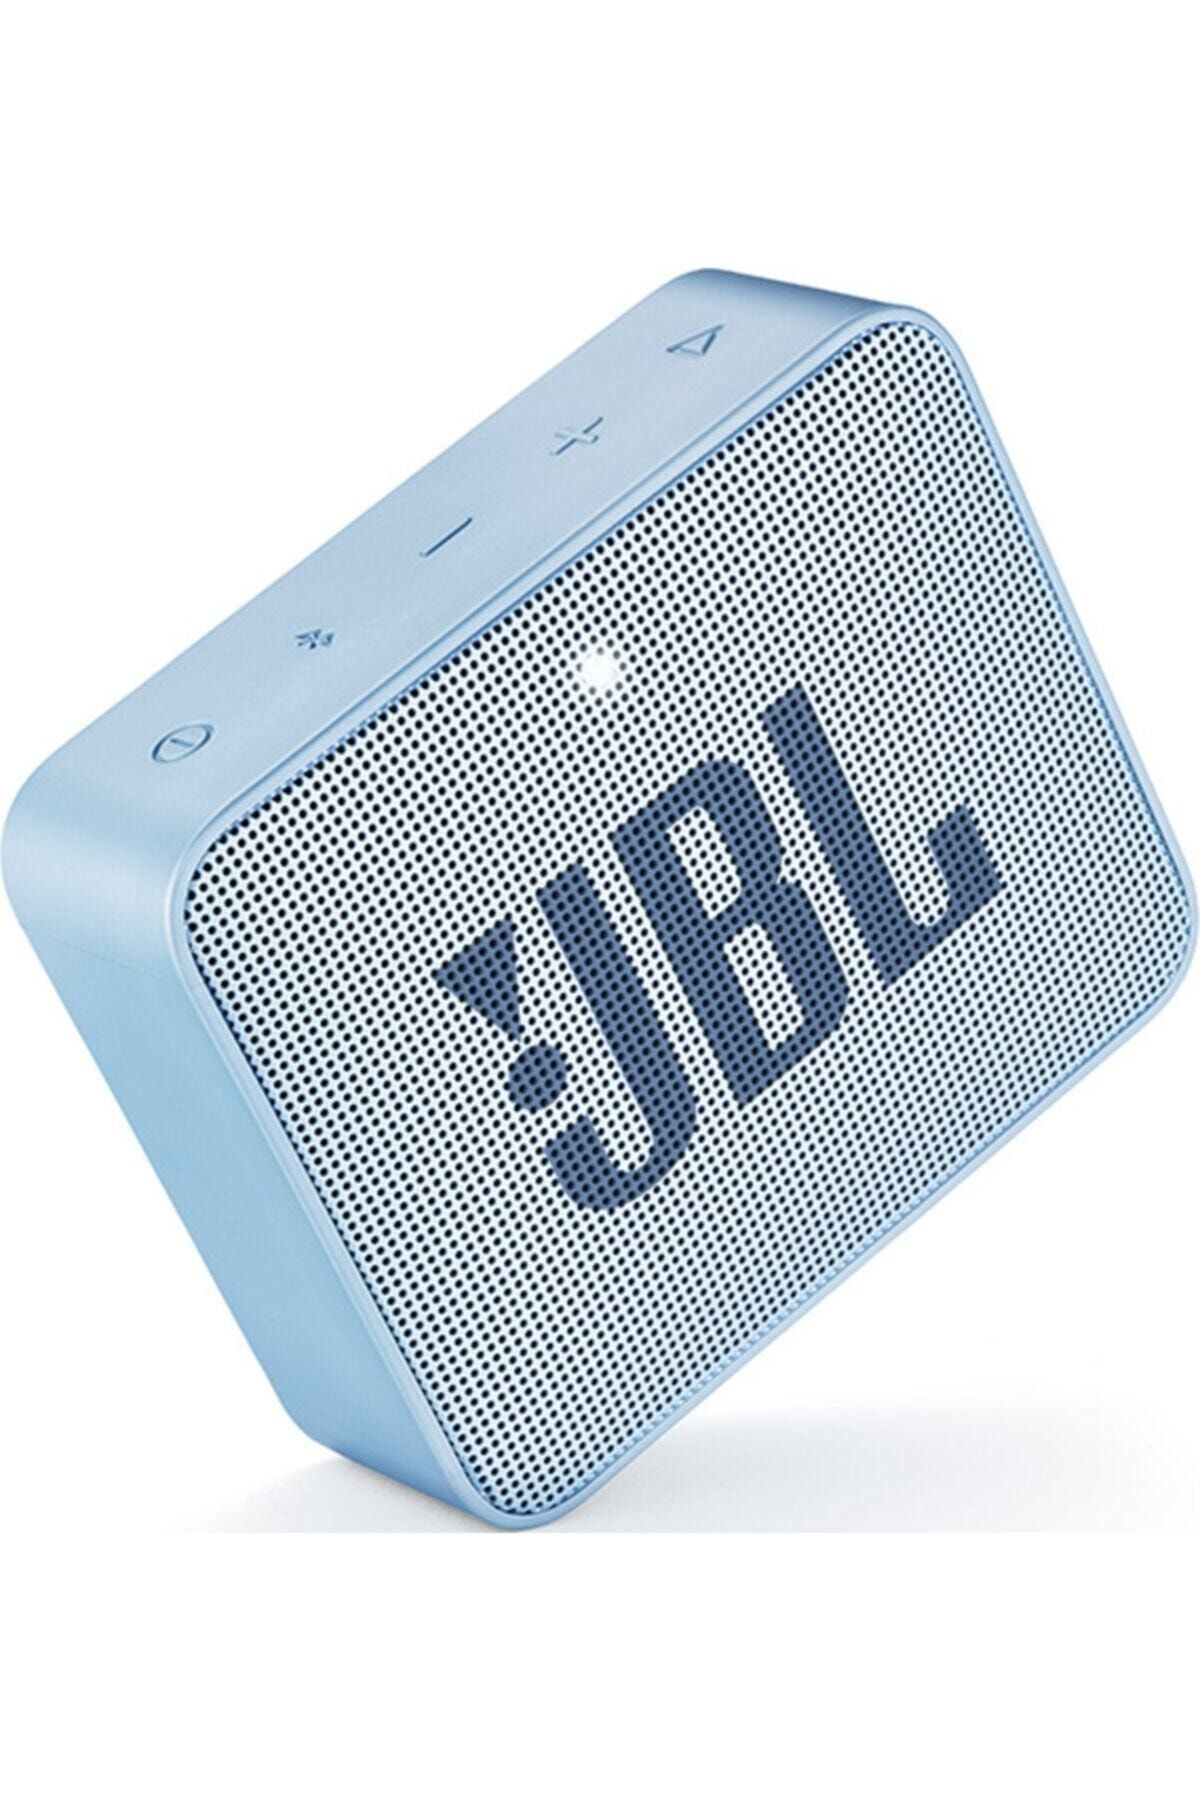 JBL Go 2 Taşınabilir Bluetooth Hoparlör - Açık Mavi